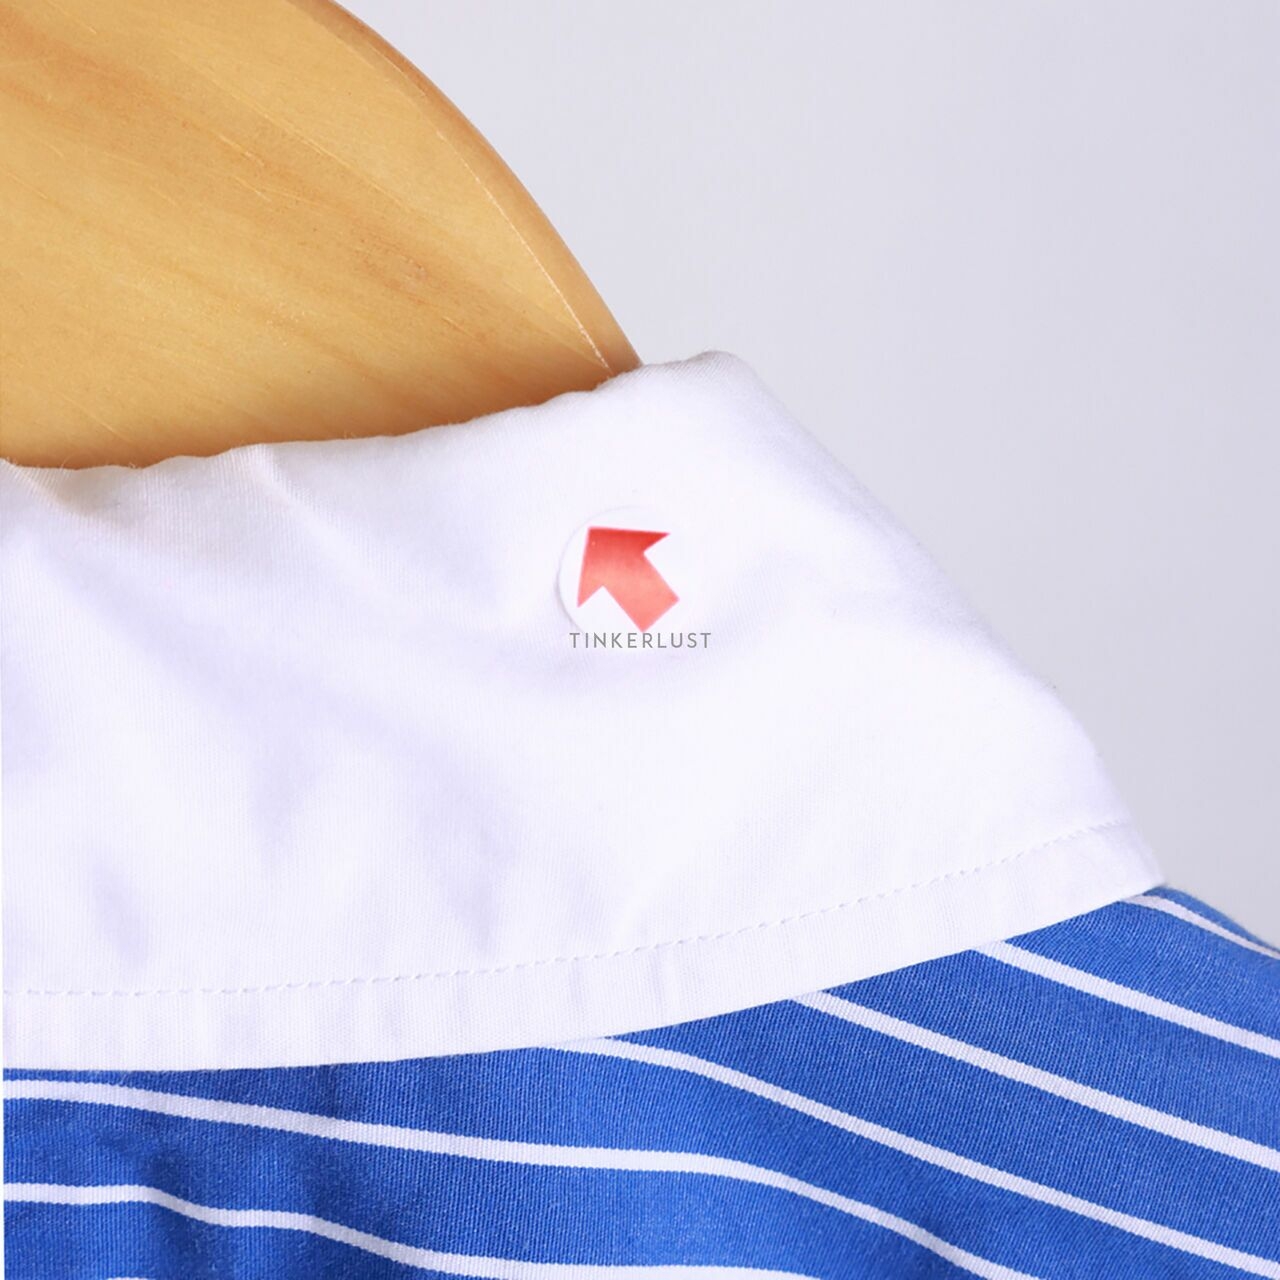 Ralph Lauren Blue & White Stripes Shirt